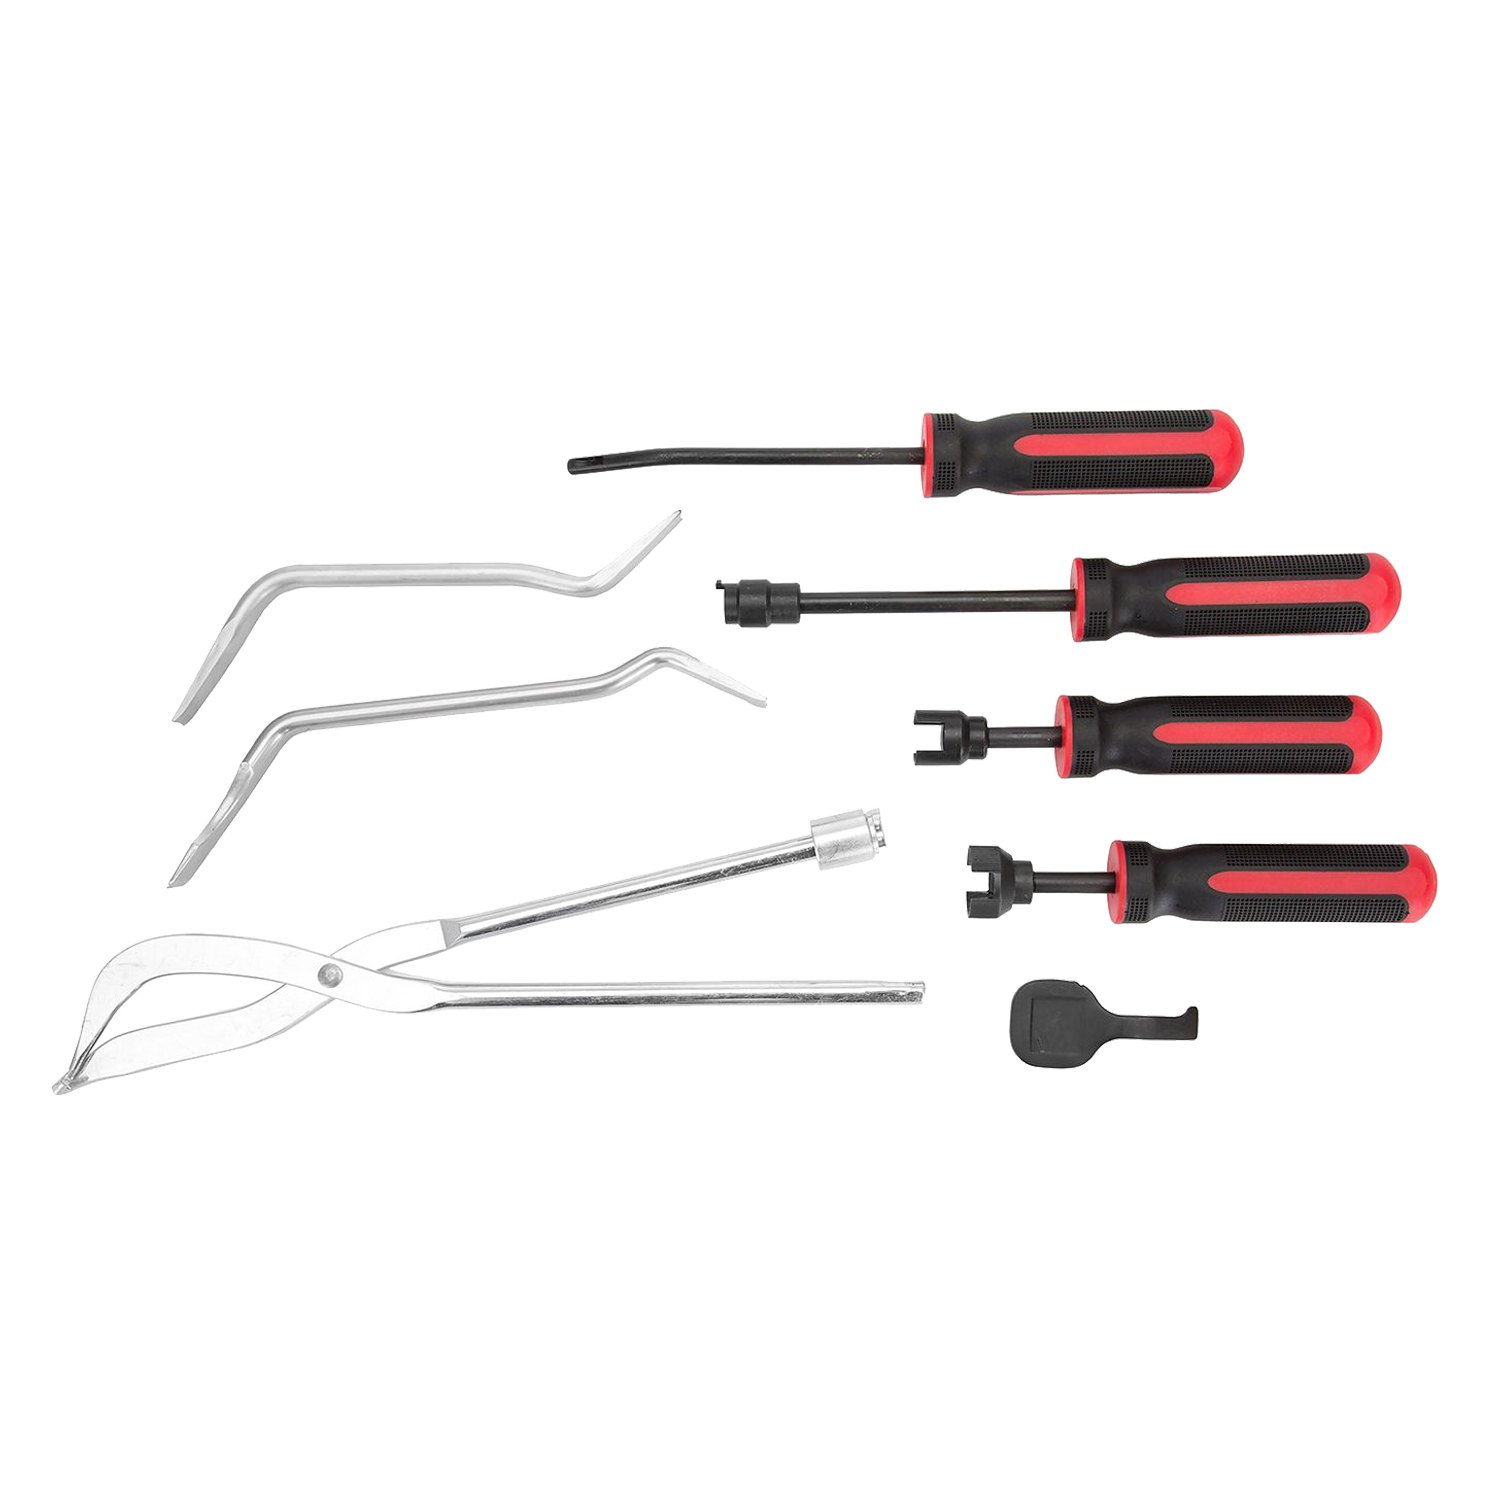 oem tools screwdriver set